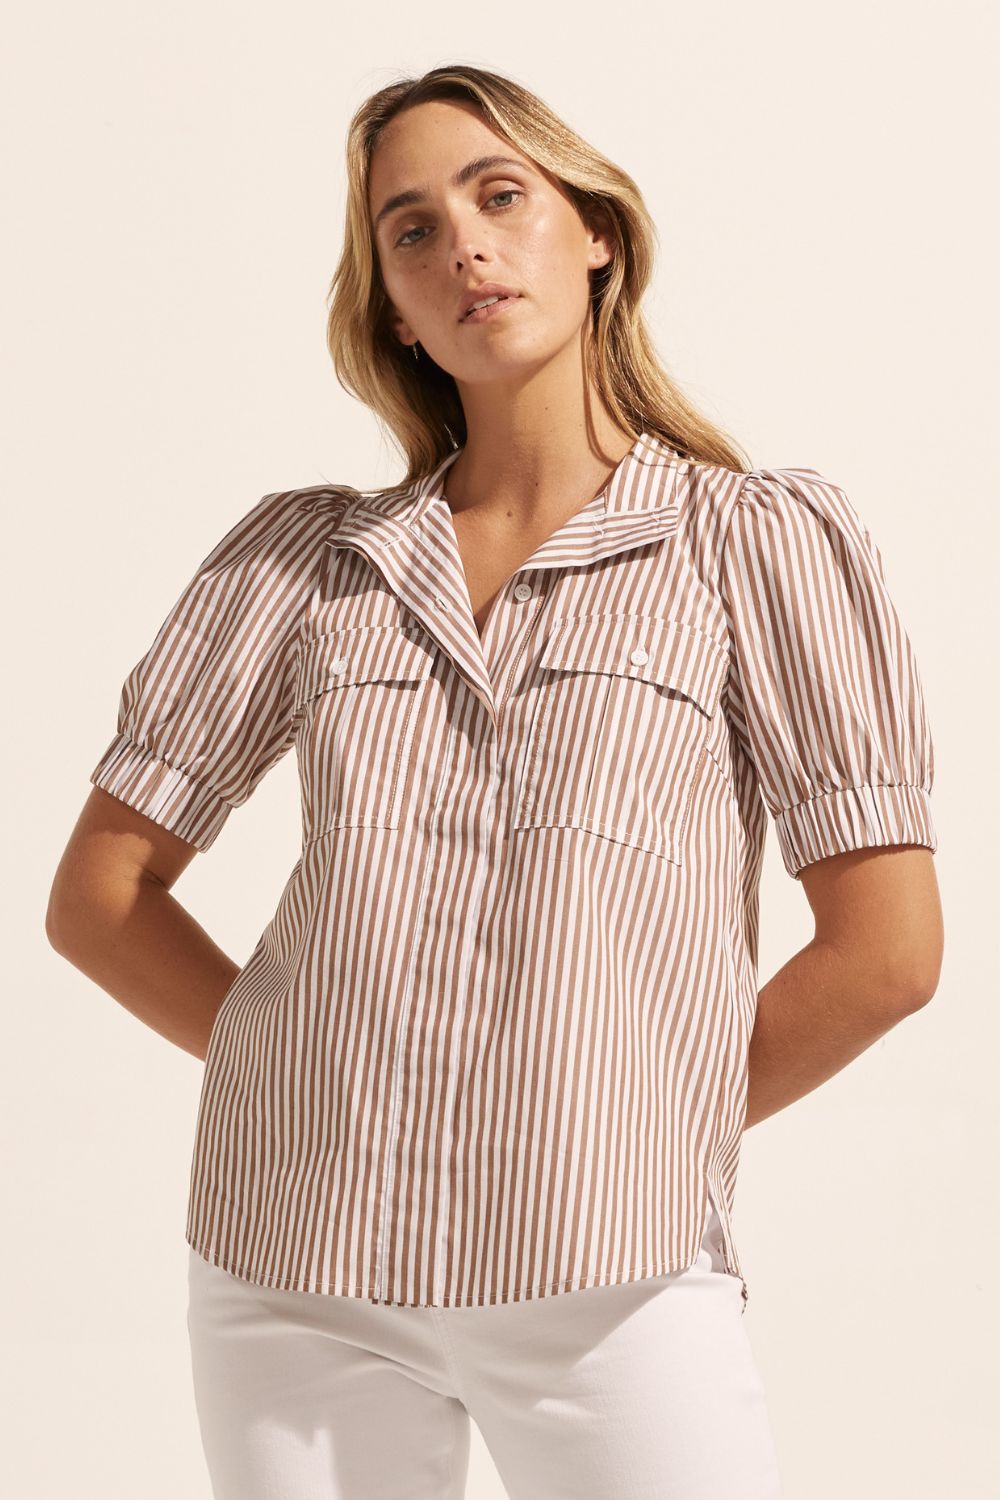 brown stripe, high neck, button up shirt, top